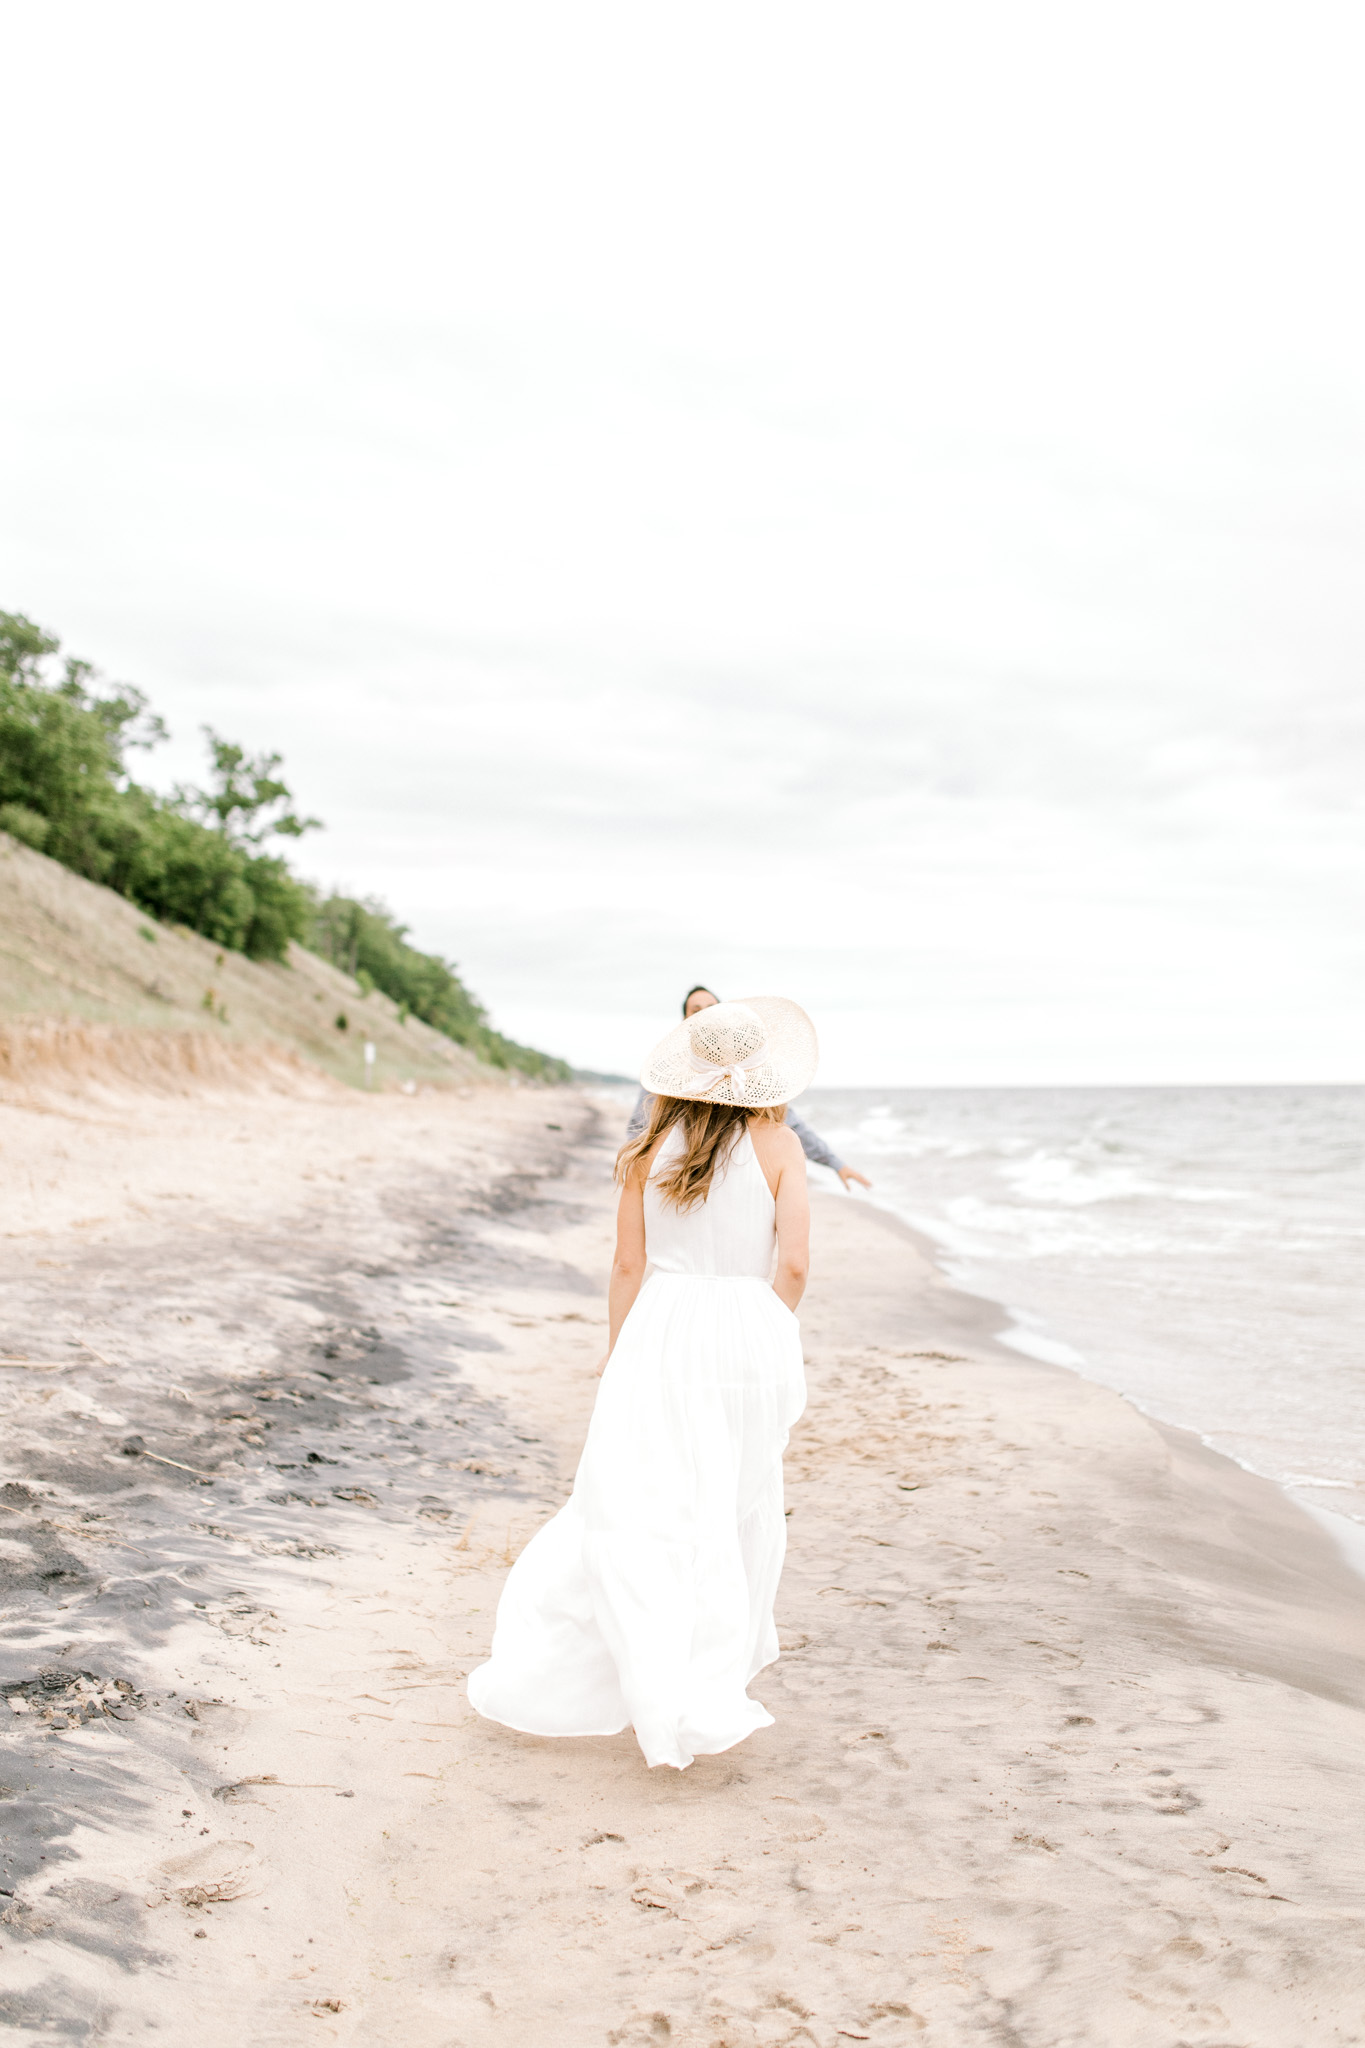 Dreamy Lake Michigan Beach Session | West Michigan Engagement | Cloudy Beach Session | Laurenda Marie Photography | West Michigan Wedding Photographer